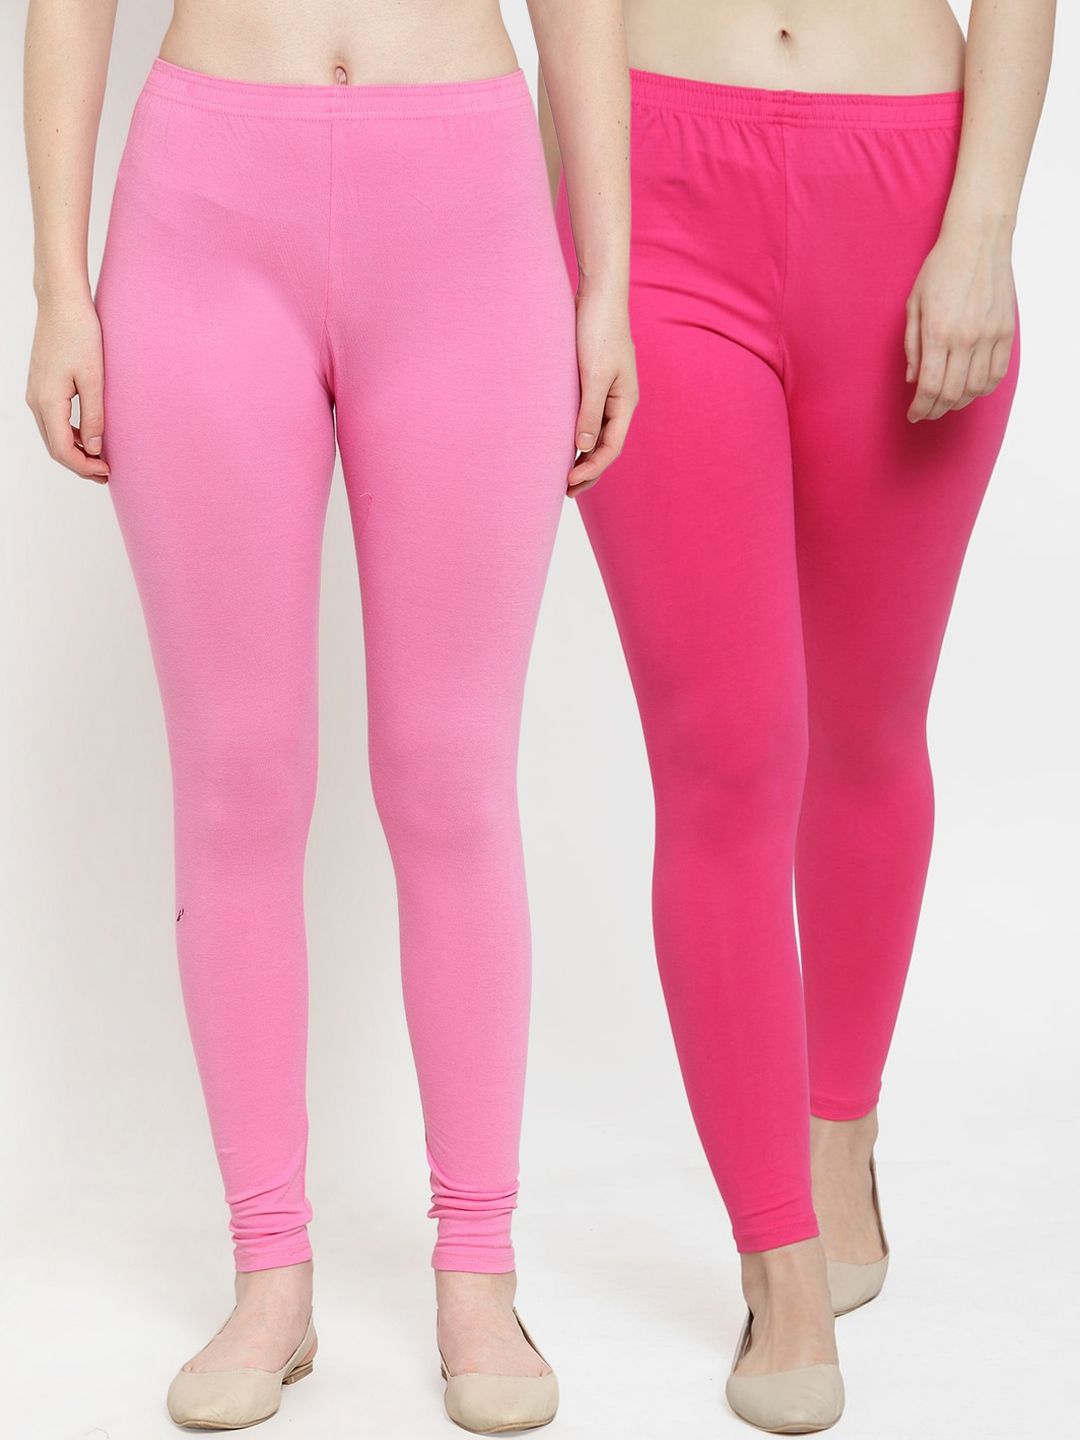 GRACIT Women Pack Of 2 Pink Solid Leggings Price in India